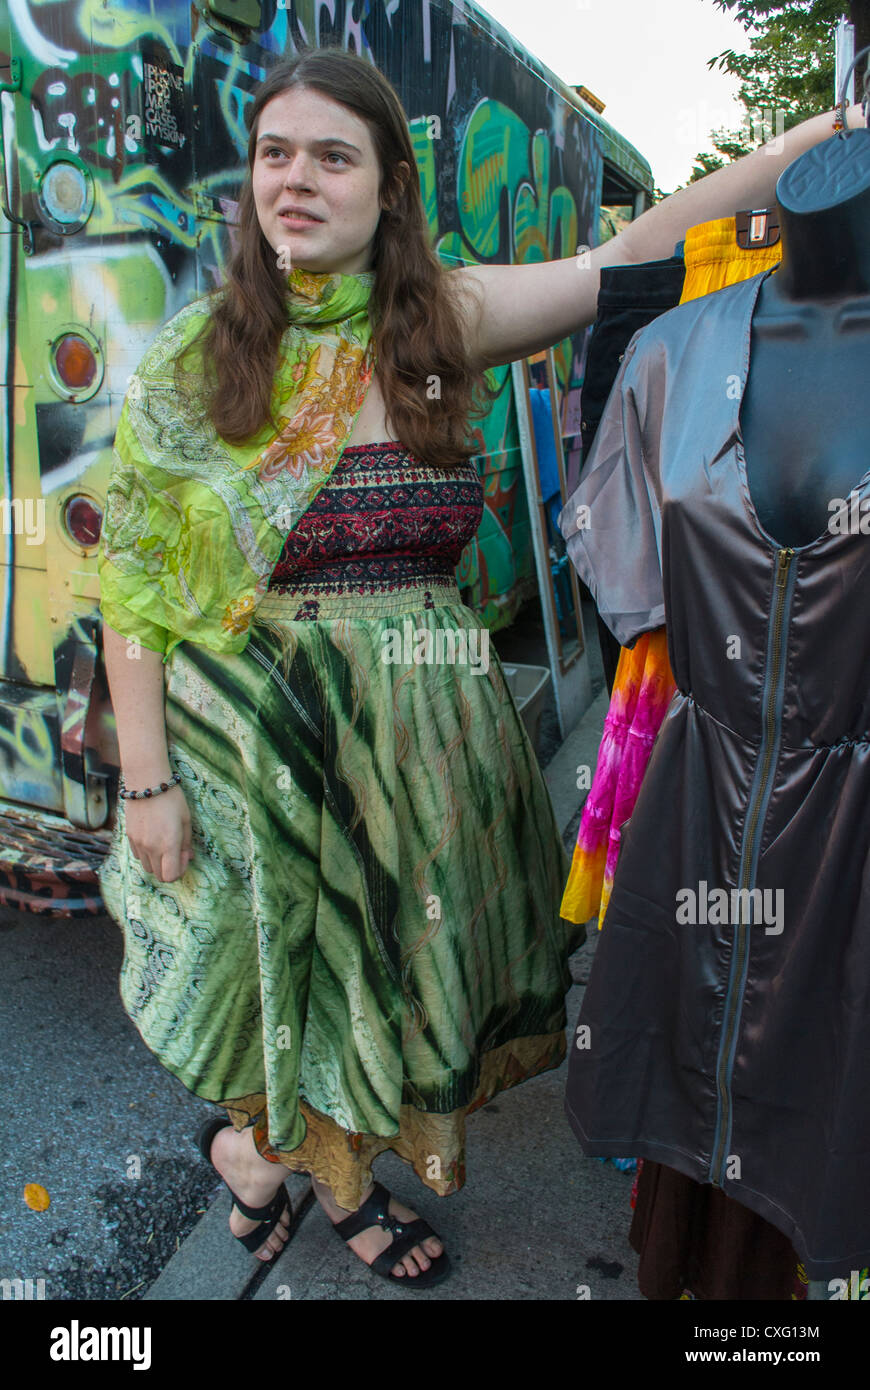 New York City, NY, USA, People enjoying the Brooklyn Street Festival, "Atlantic Antic", Female Fashion Designer in Original Dress, Flea market Stock Photo